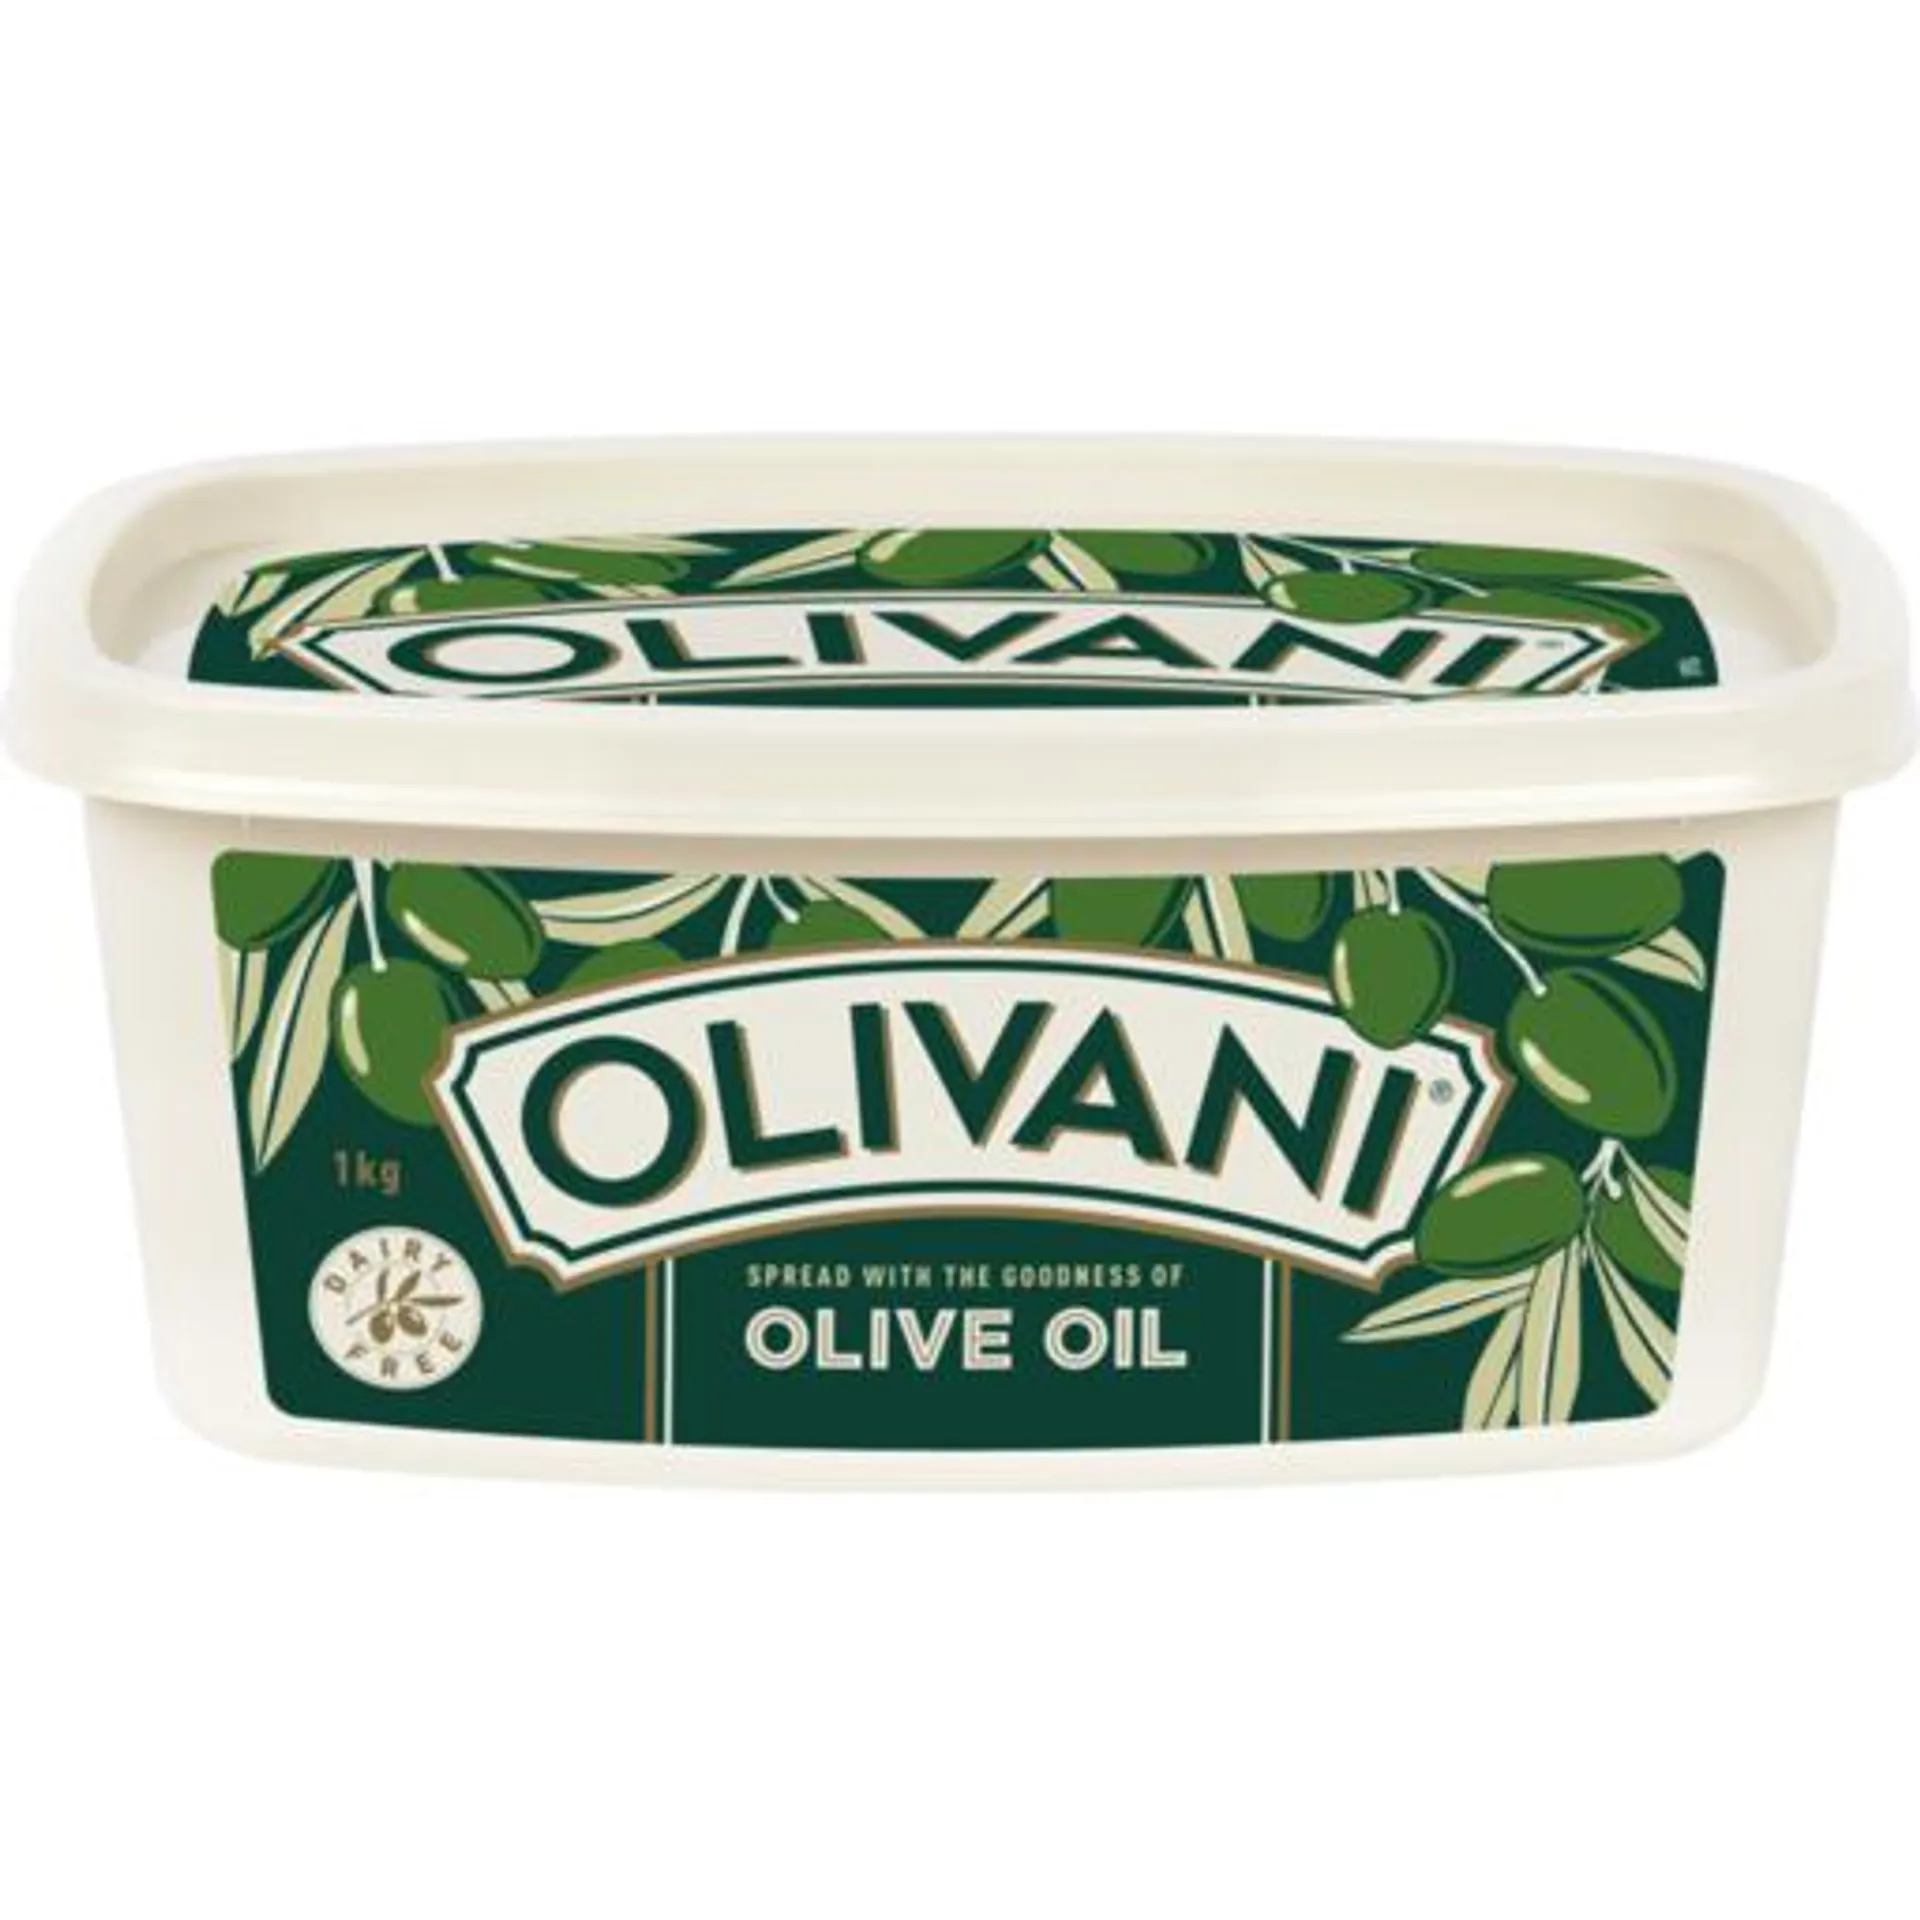 Olivani Spread 1kg